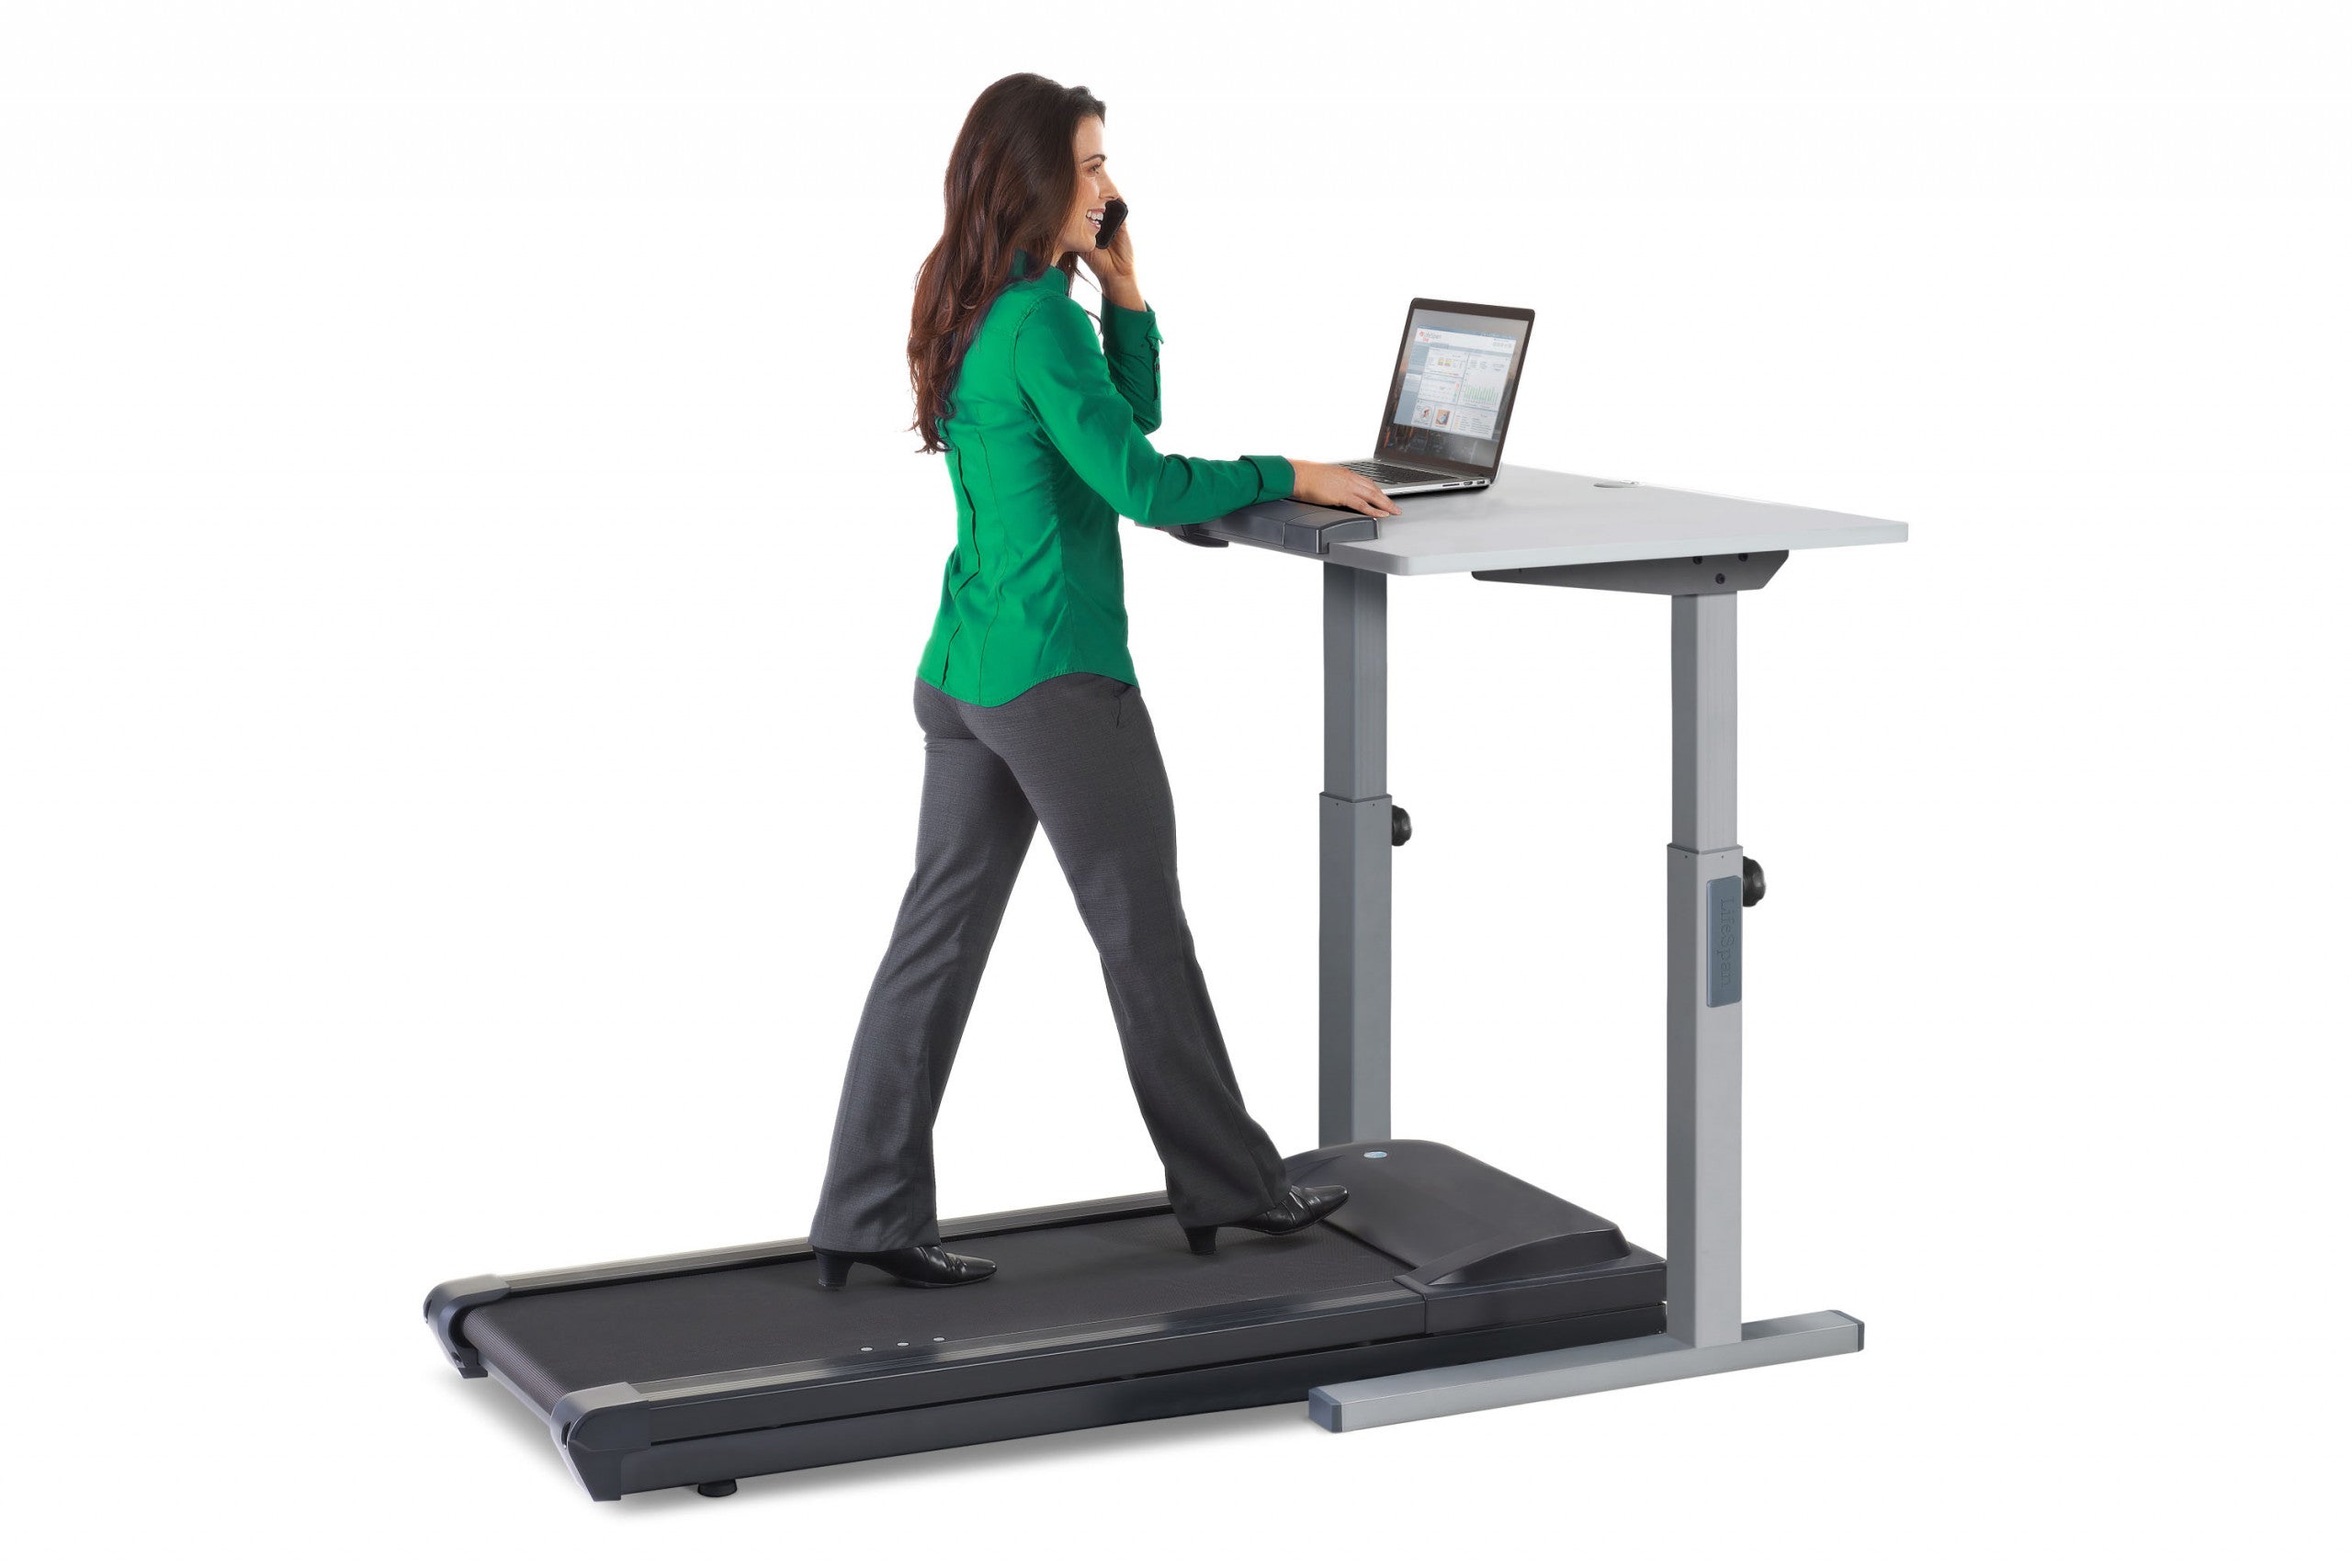 Cintas de correr-escritorio (treadmill desk)